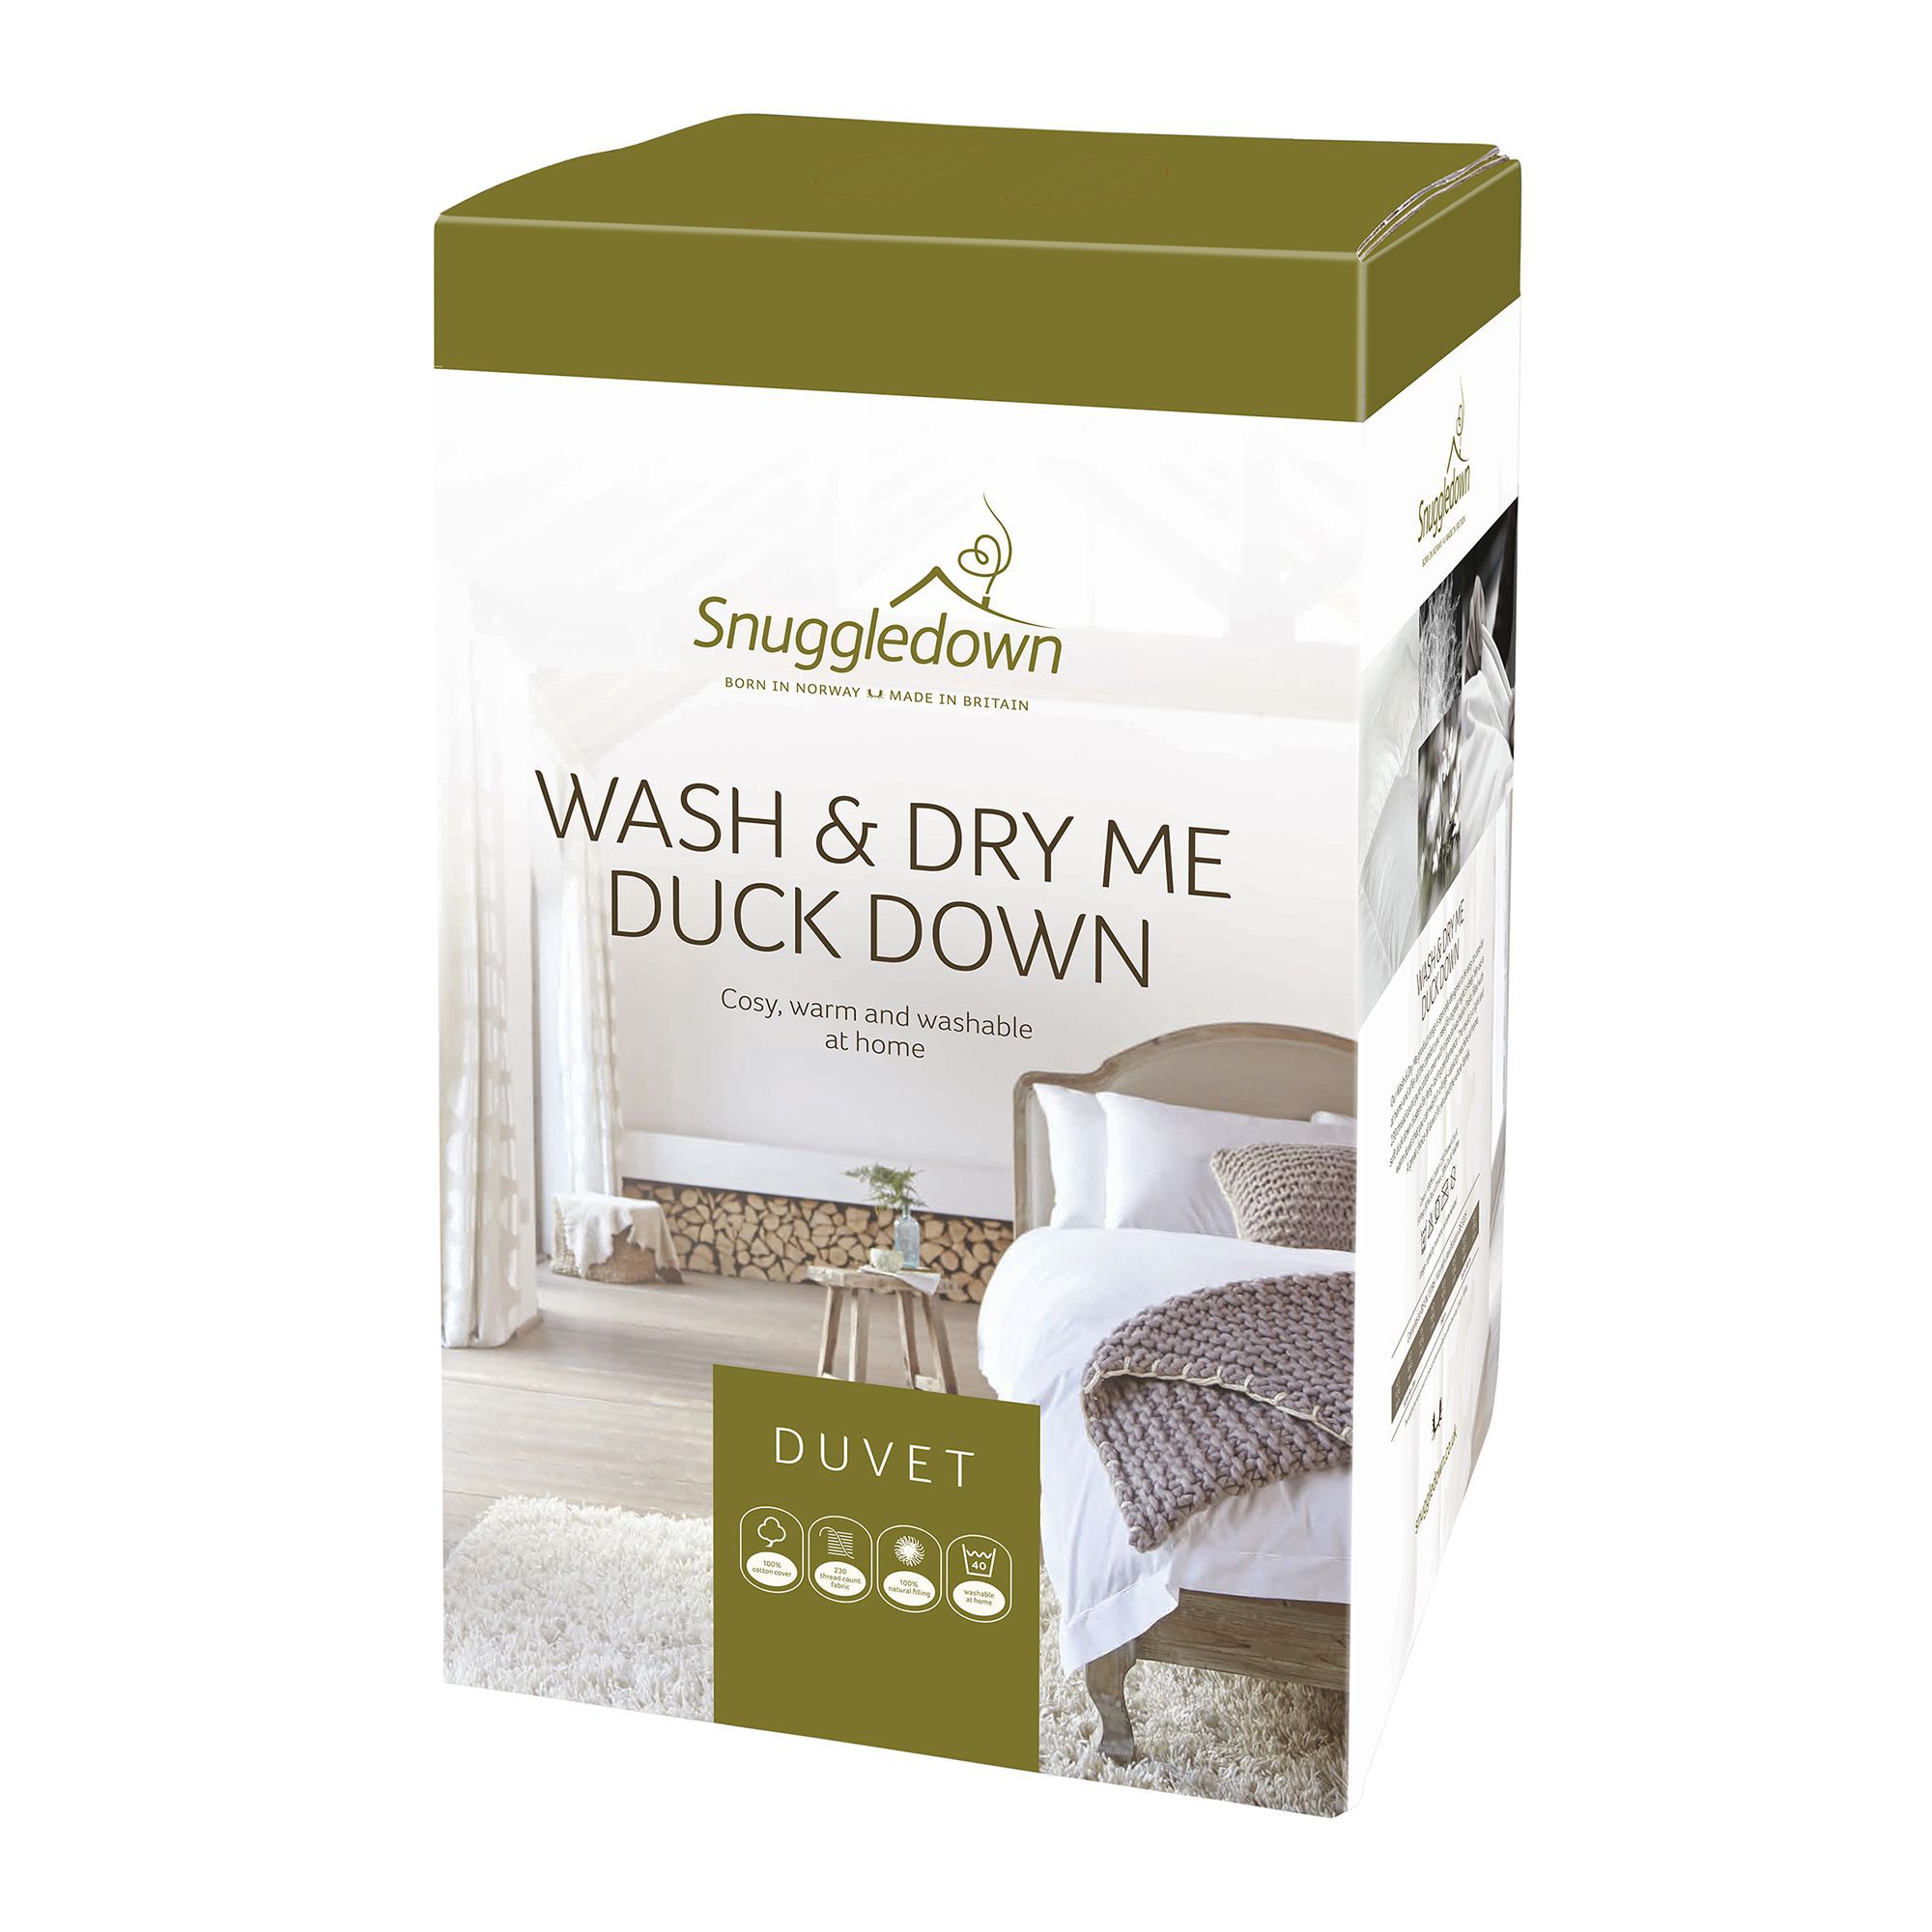 Snuggledown Wash Dry Me Duck Down Double Duvet 13 5 Tog Duvets